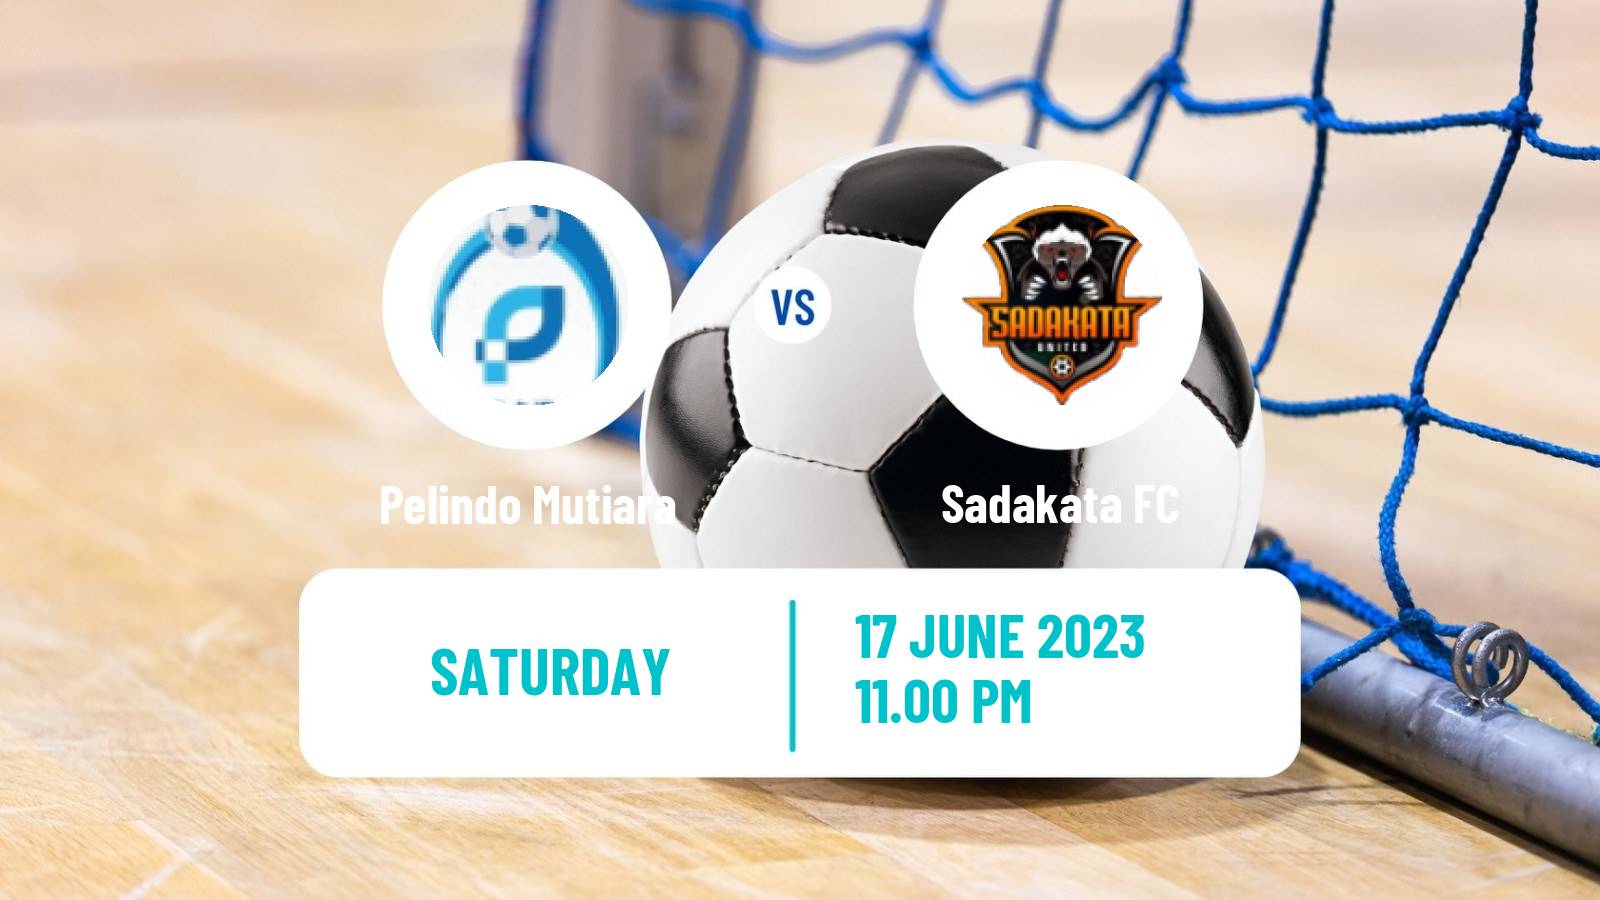 Futsal Indonesian Pro Futsal League Pelindo Mutiara - Sadakata